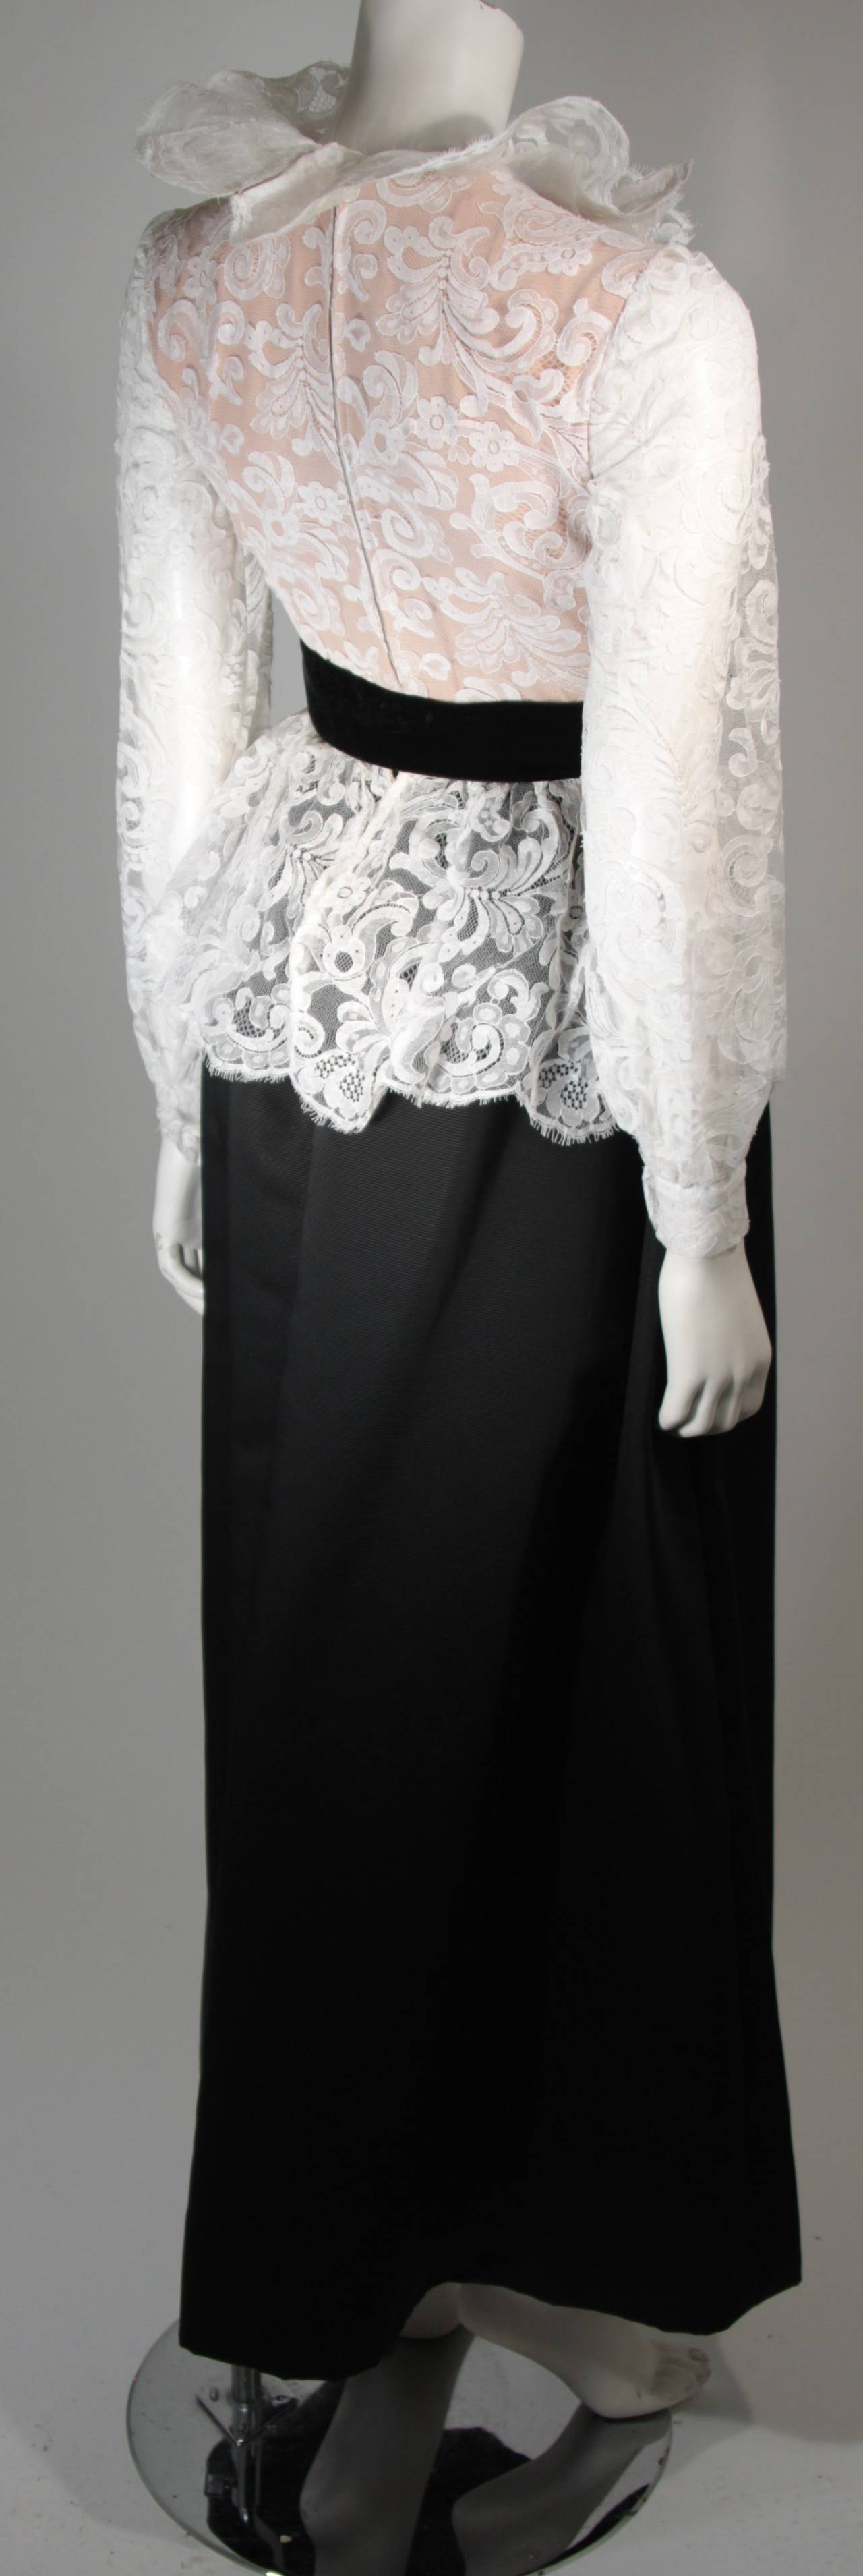 Oscar De La Renta Black & White Gown with Scalloped edged Lace Bodice Size Small For Sale 1